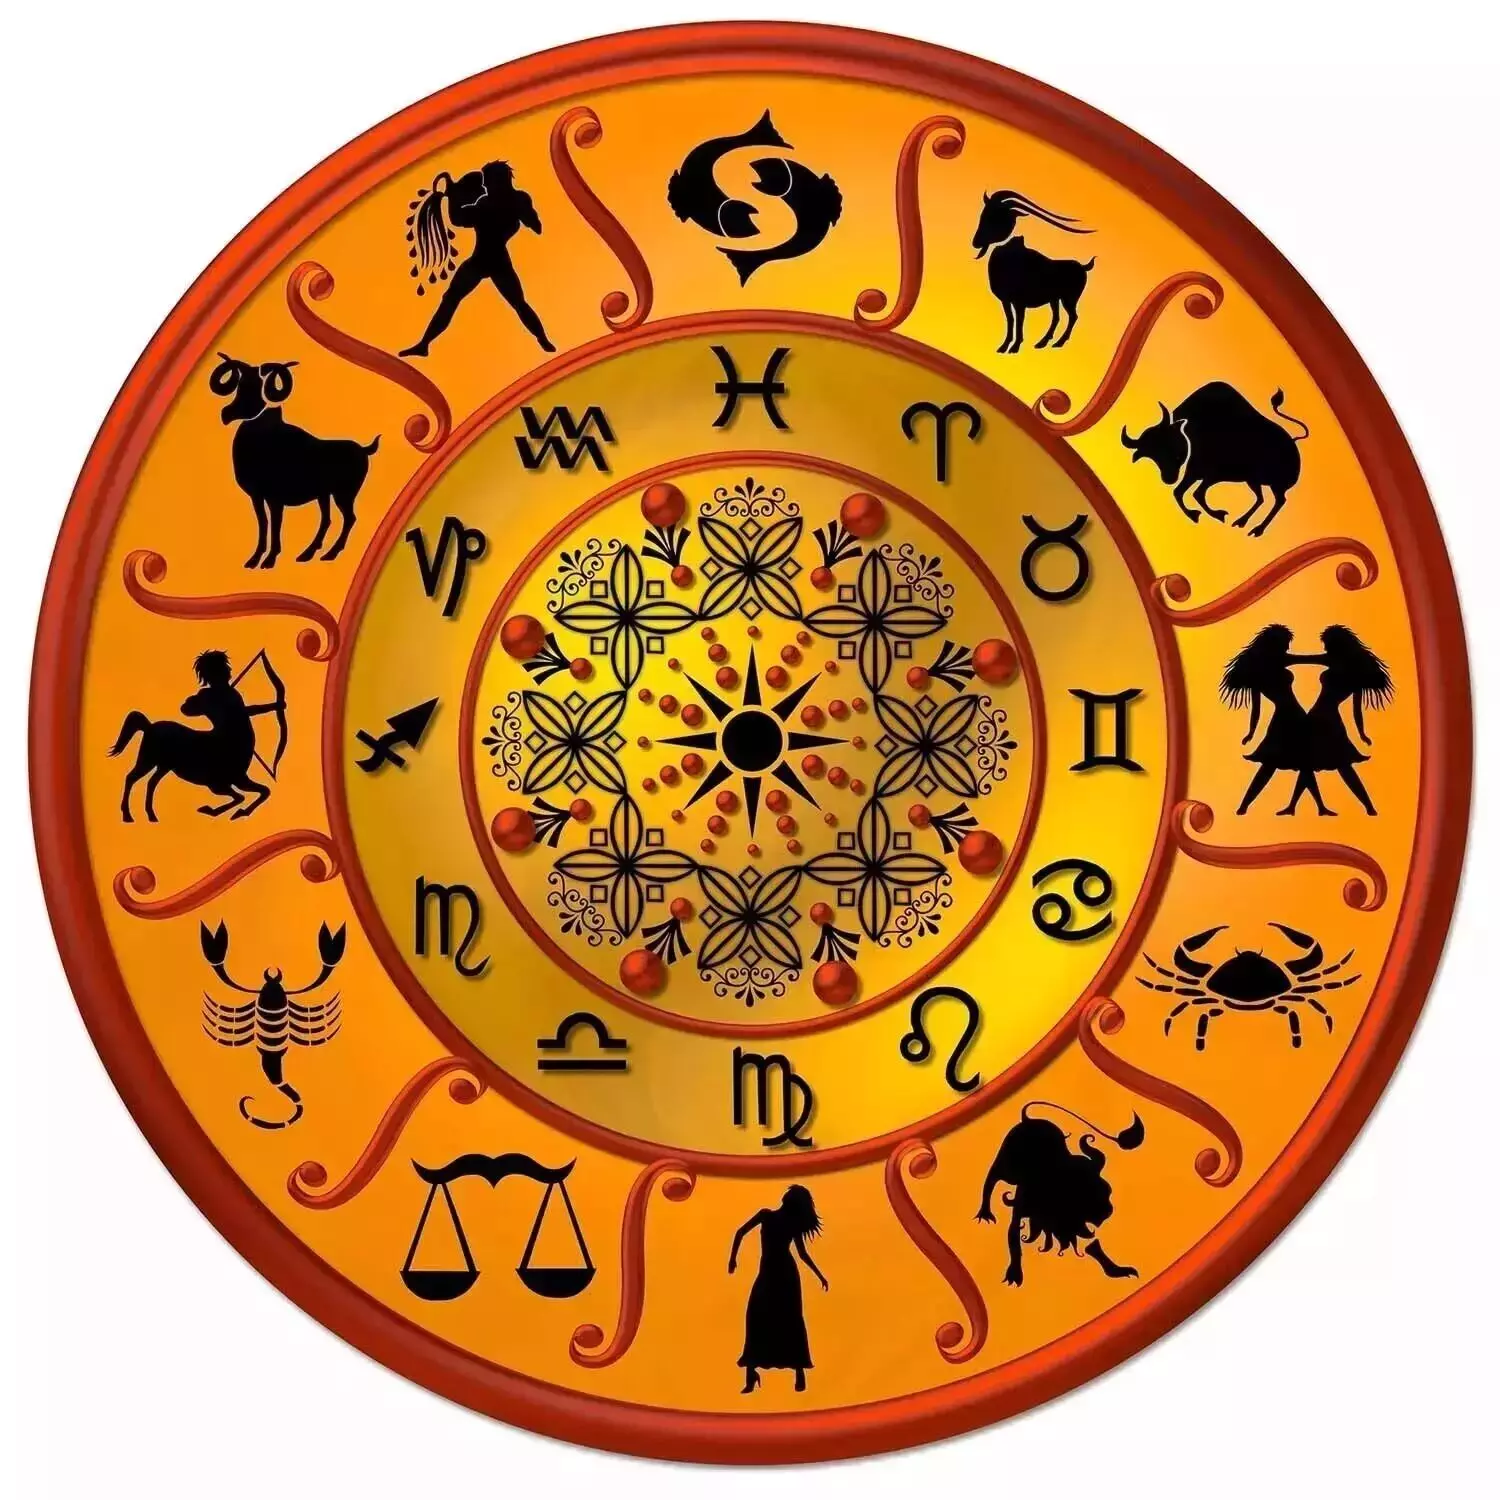 24 November – Know your todays horoscope